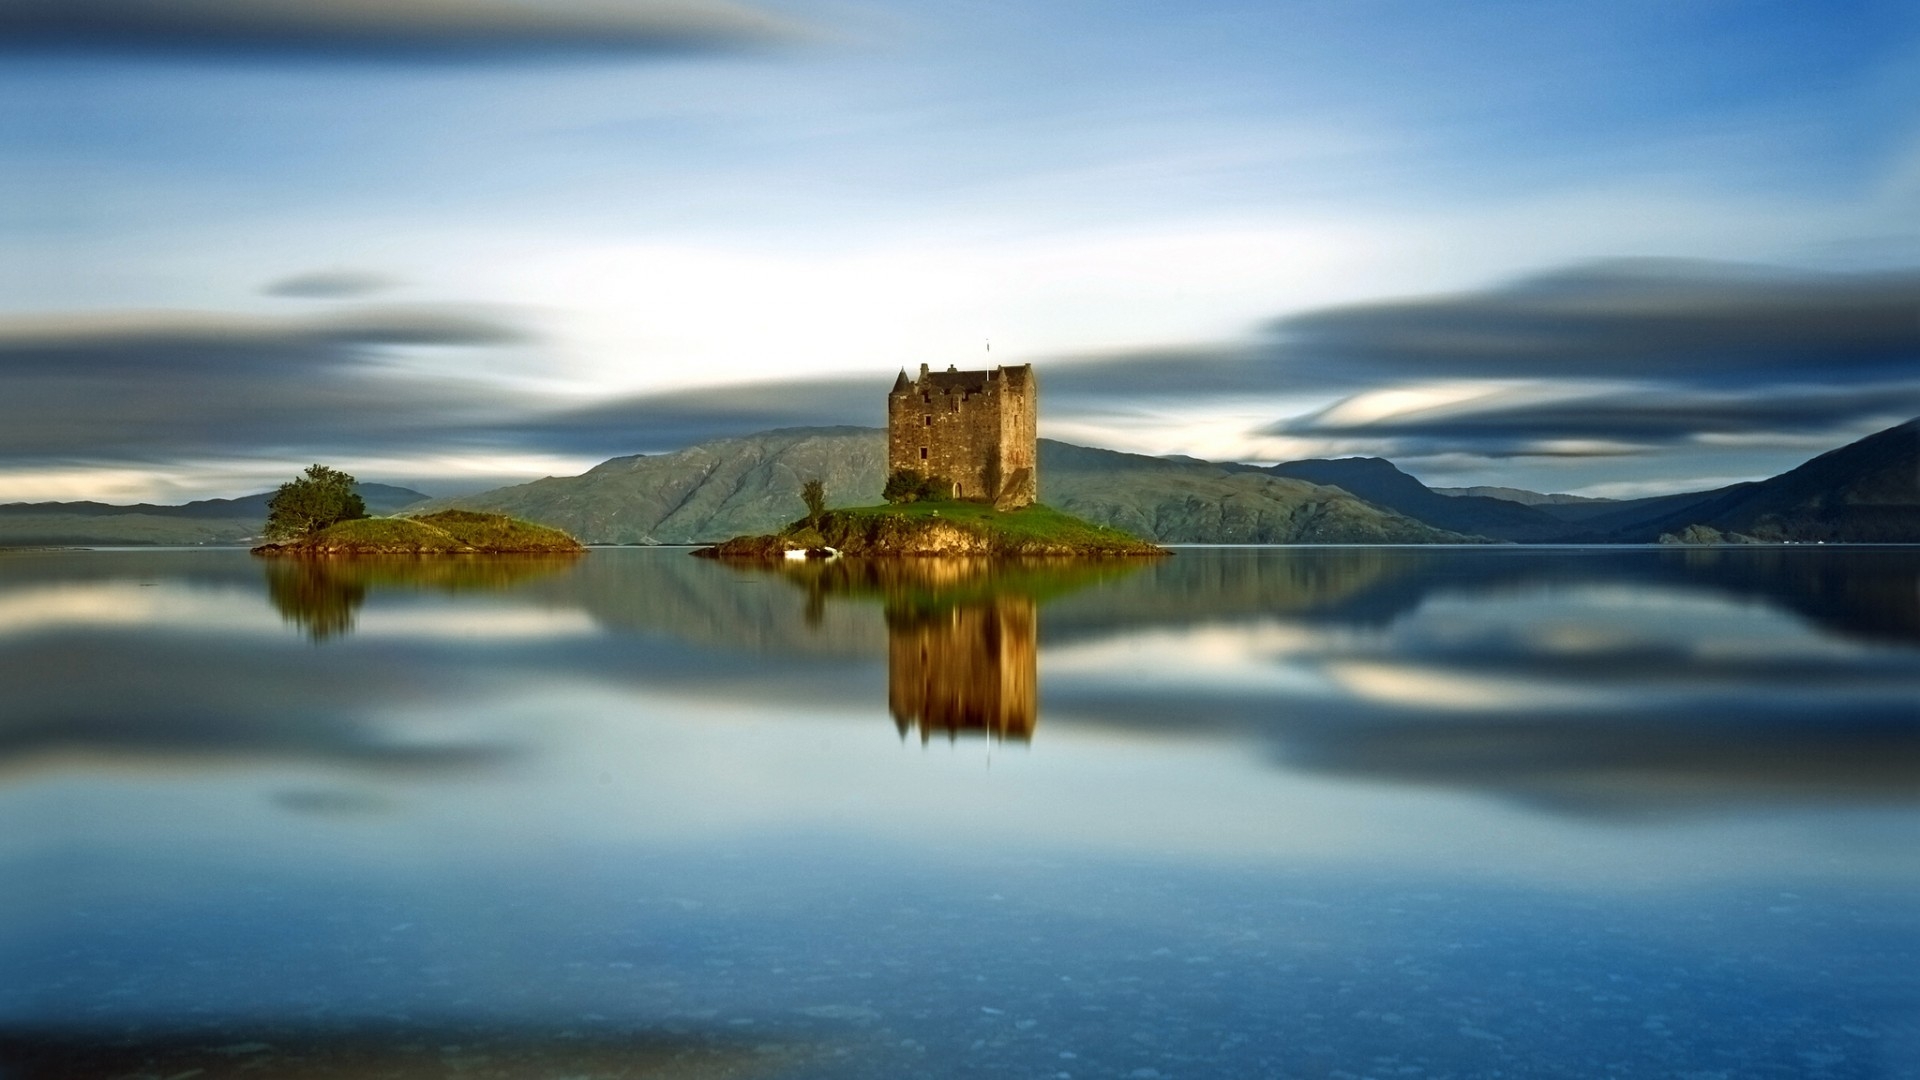 Castle Stalker Scotland for 1920 x 1080 HDTV 1080p resolution